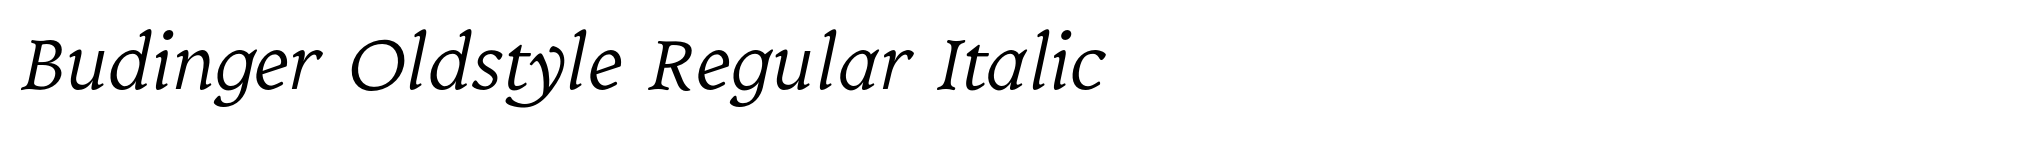 Budinger Oldstyle Regular Italic image